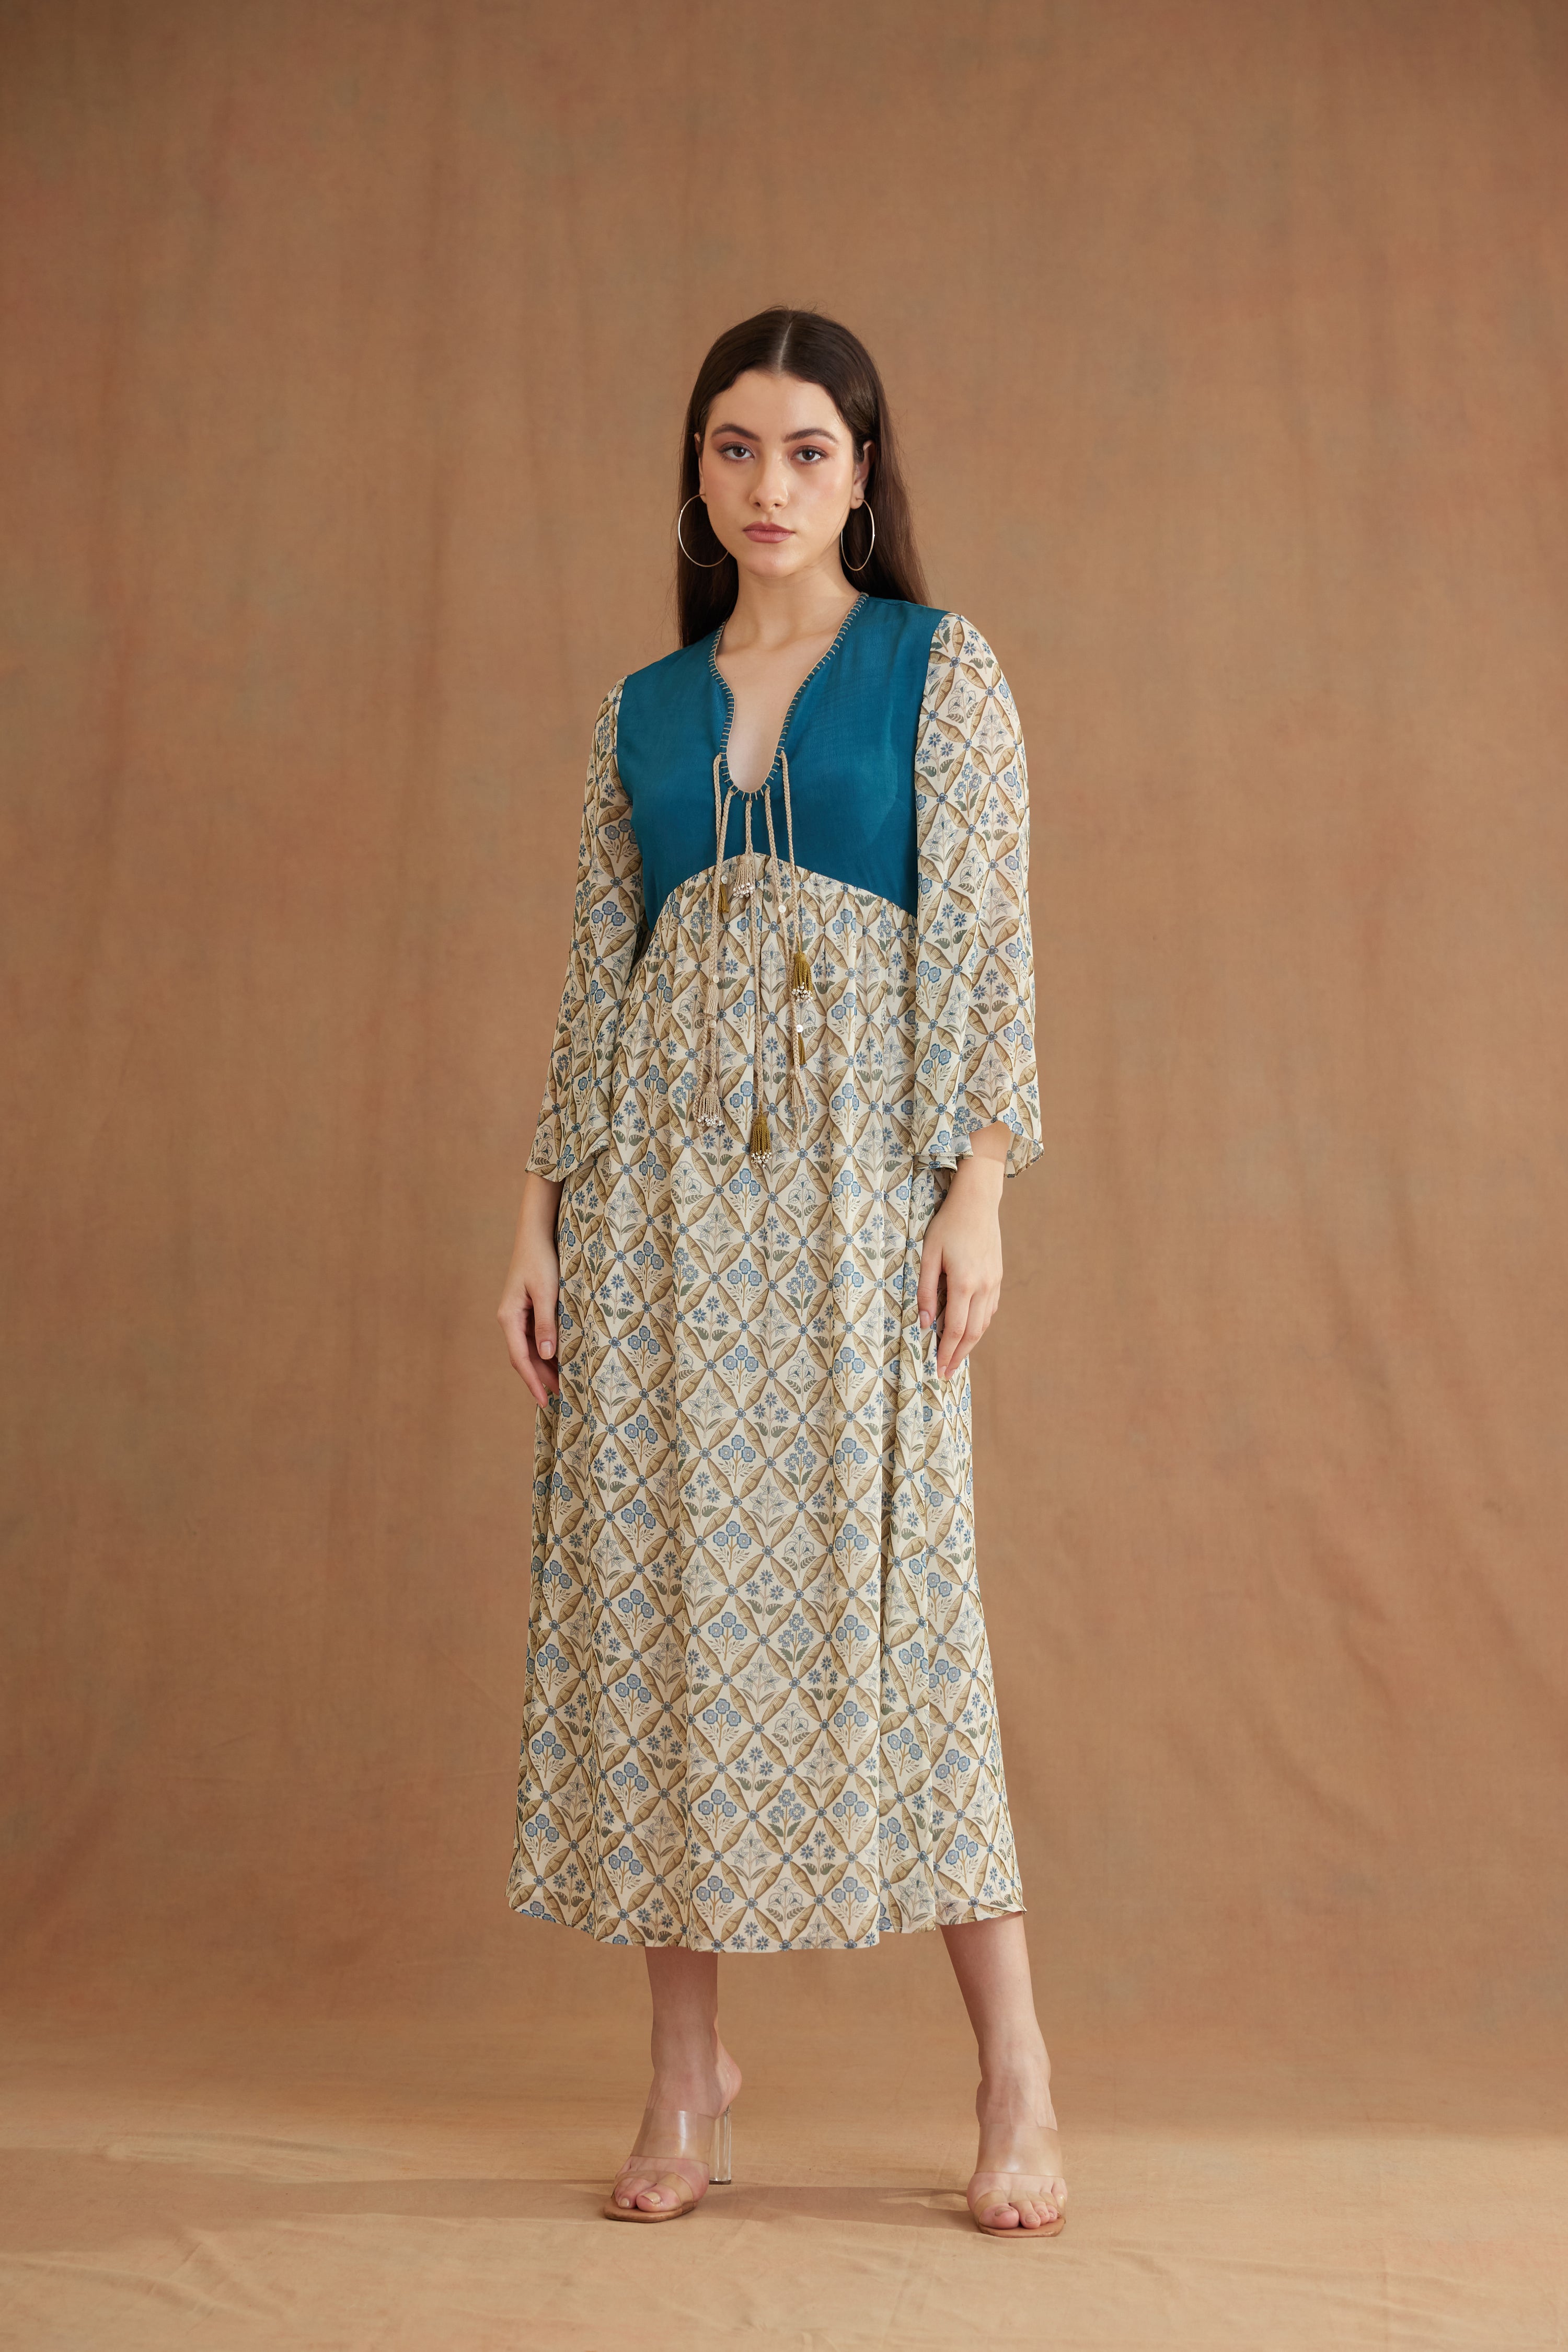 Exclusive indigo printed designer one piece dress – Sujatra